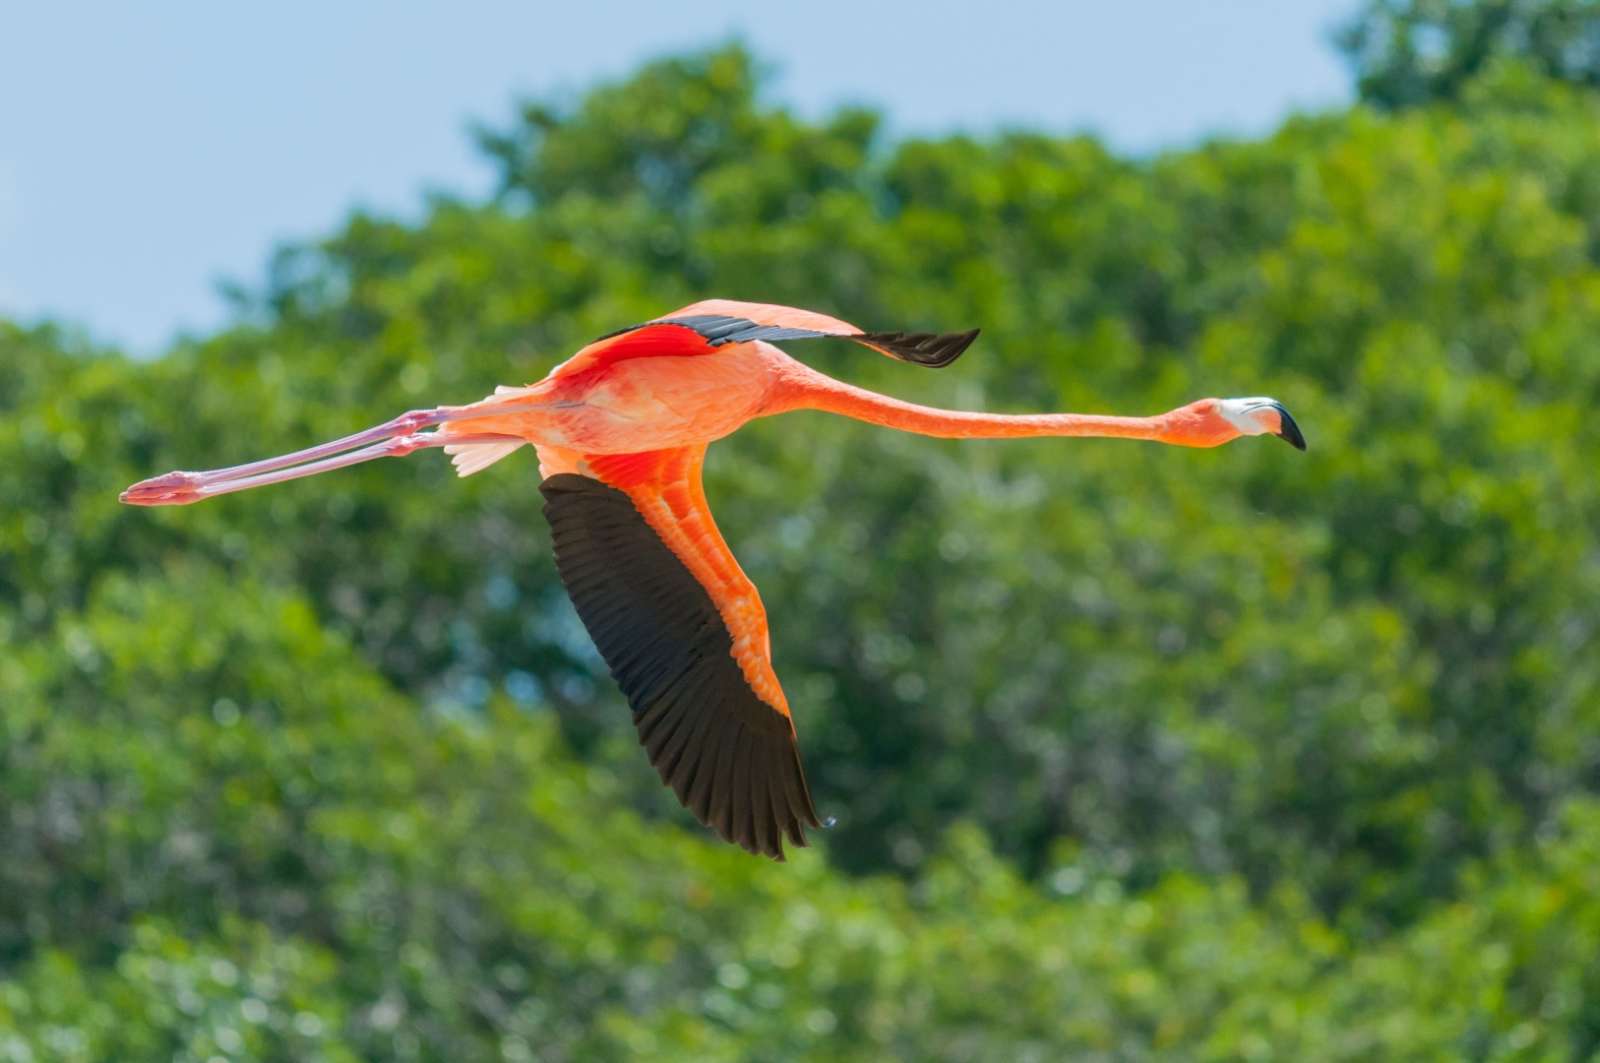 Flamingo at Celestun near Merida, Yucatan